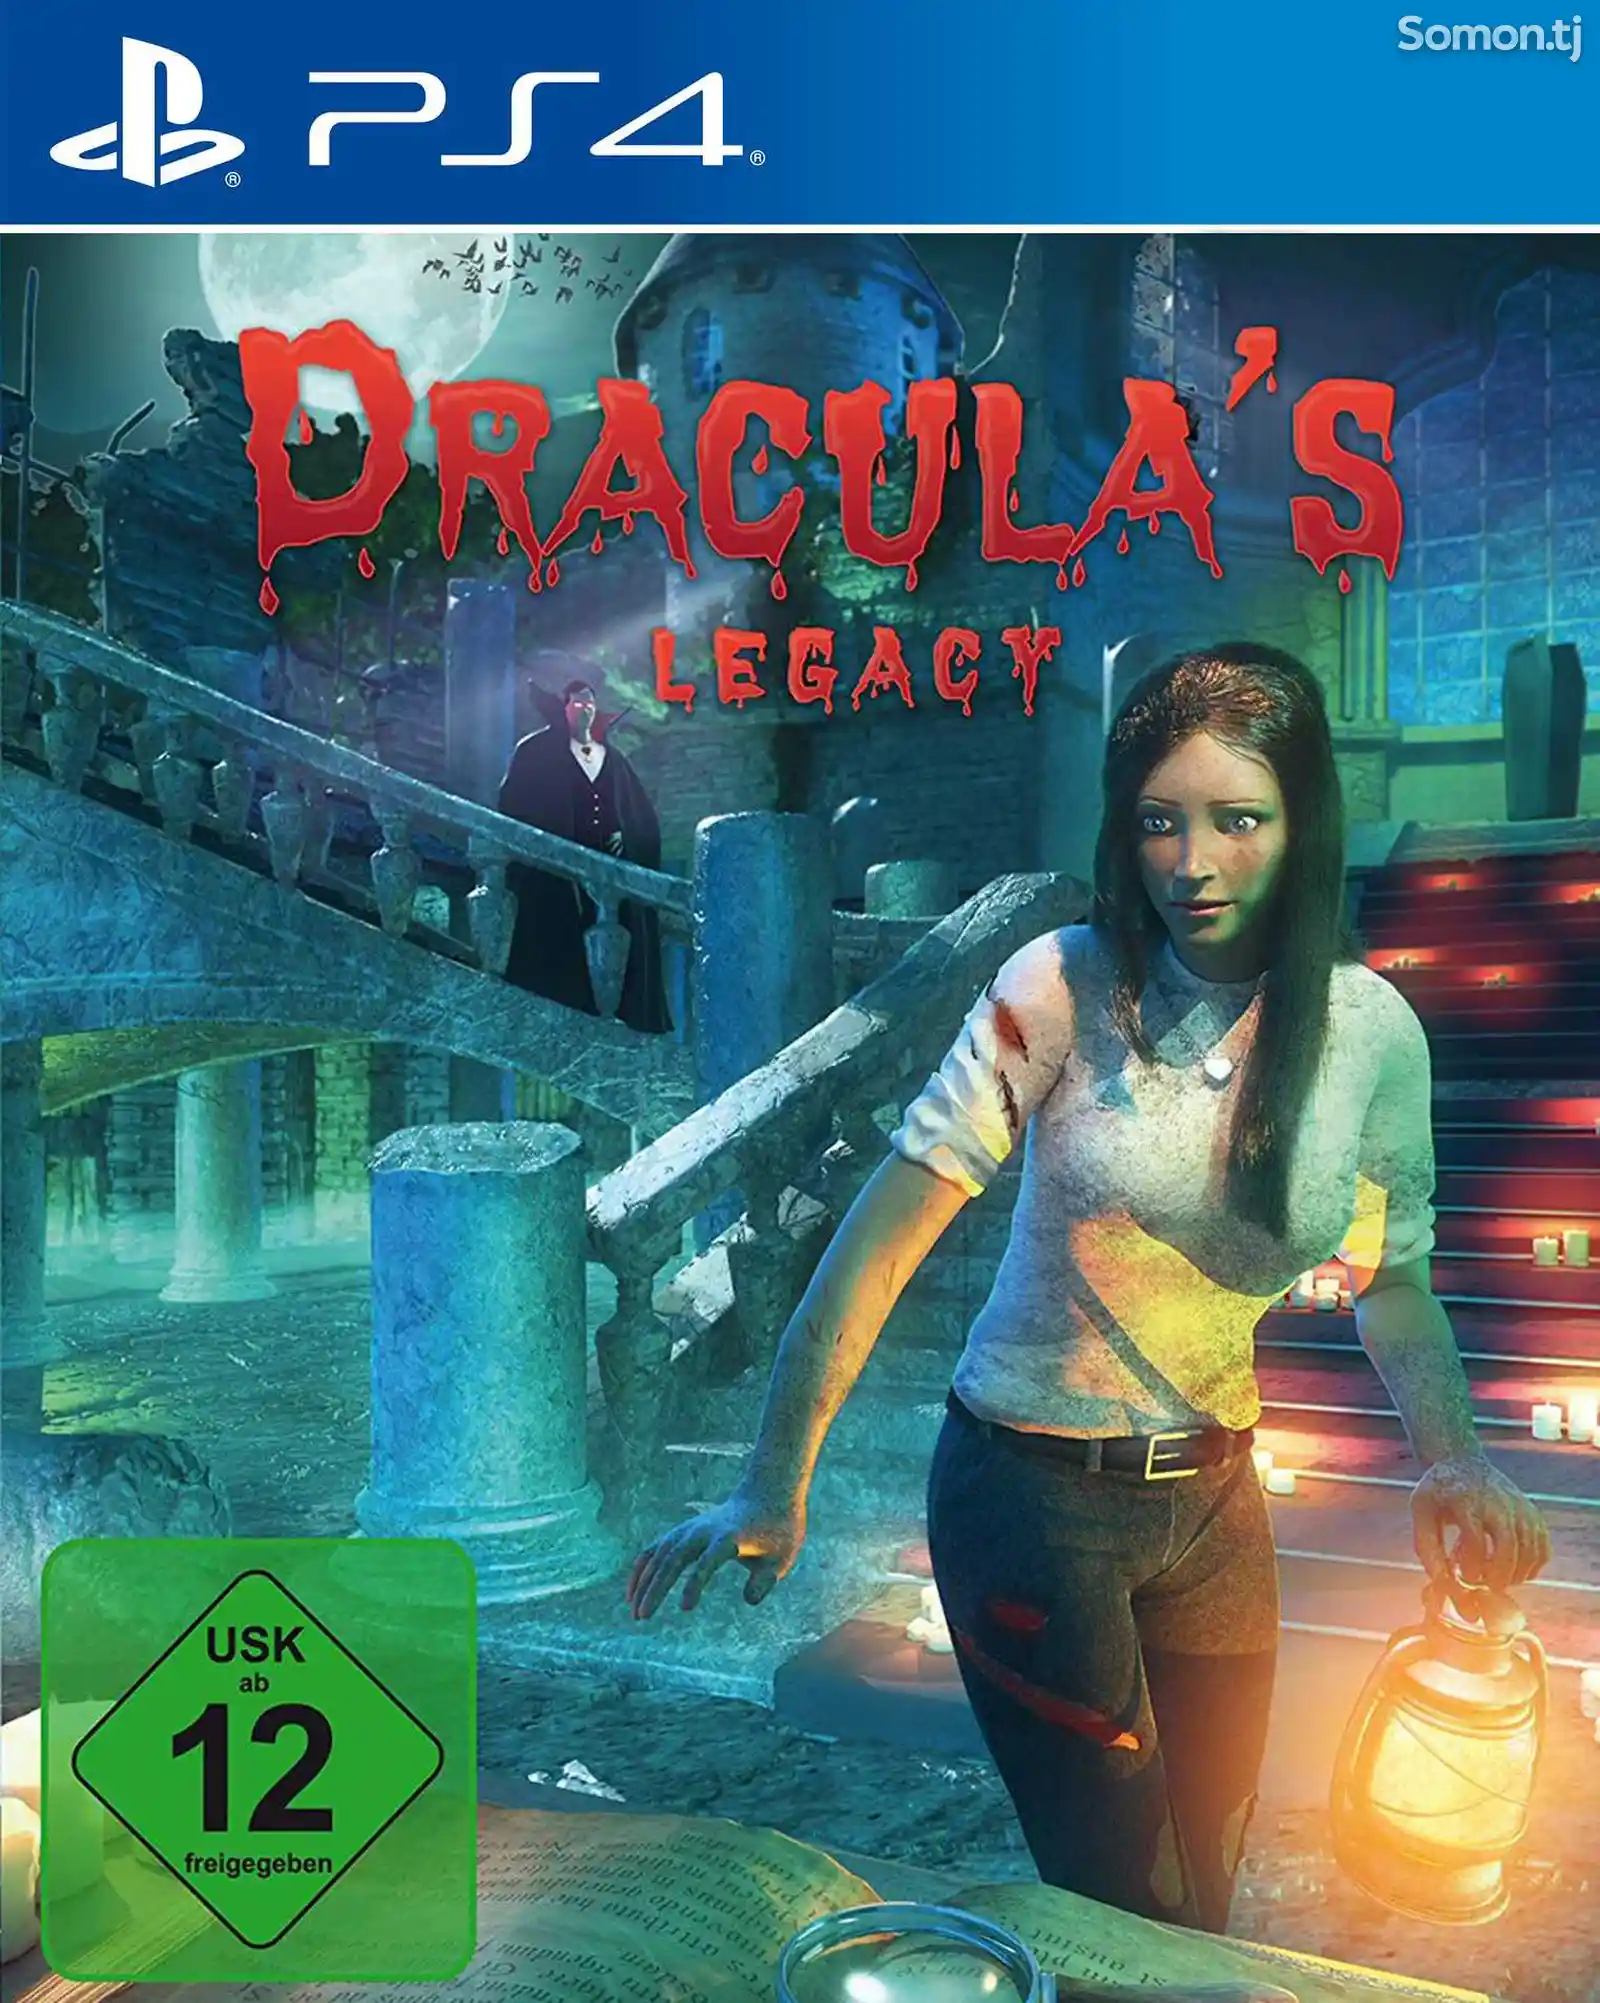 Игра Draculas slegacy для PS-4 / 5.05 / 6.72 / 7.02 / 7.55 / 9.00 /-1